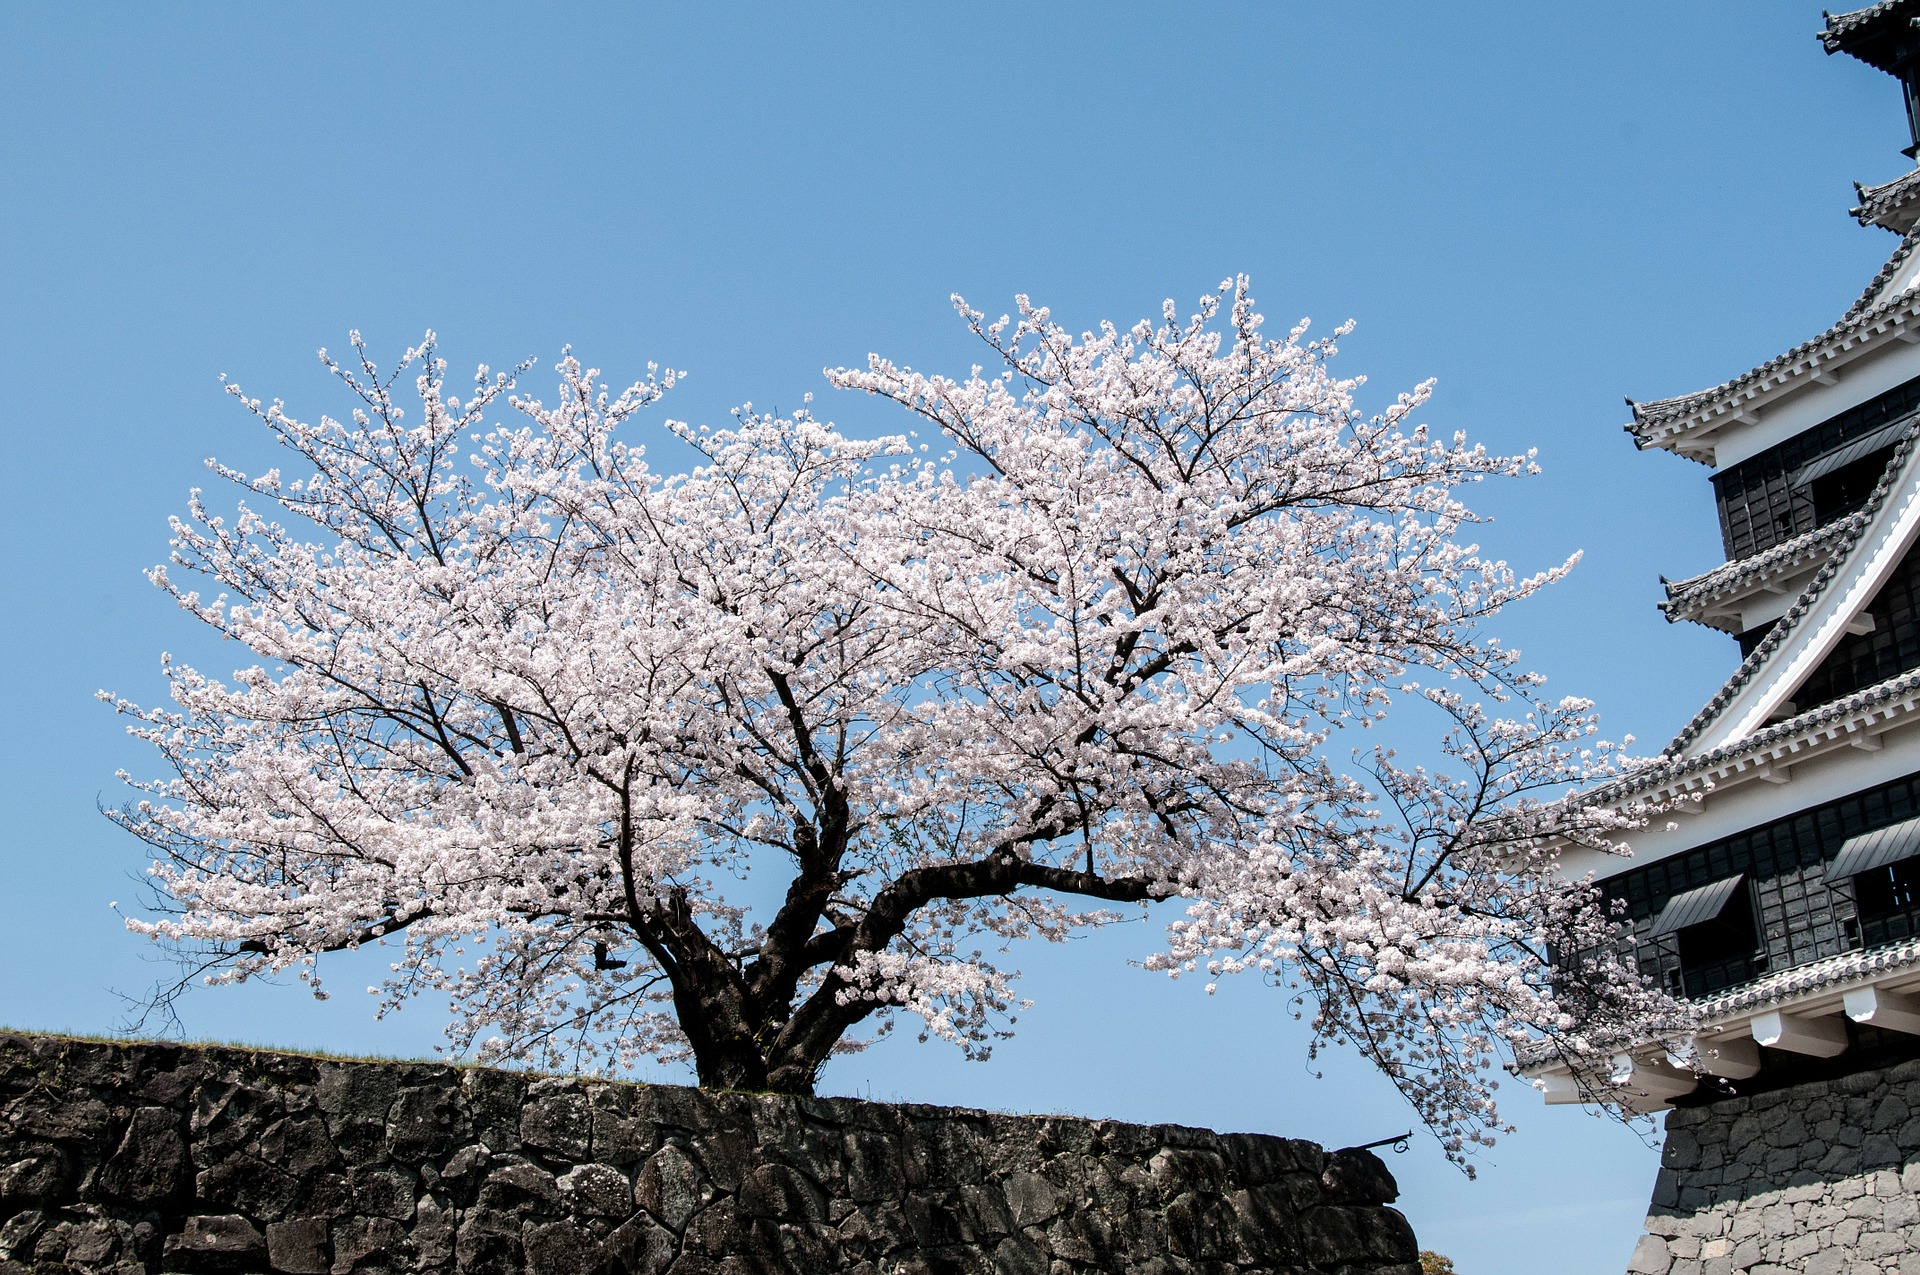 hanami-japan-s-cherry-blossom-viewing-tradition-marsman-drysdale